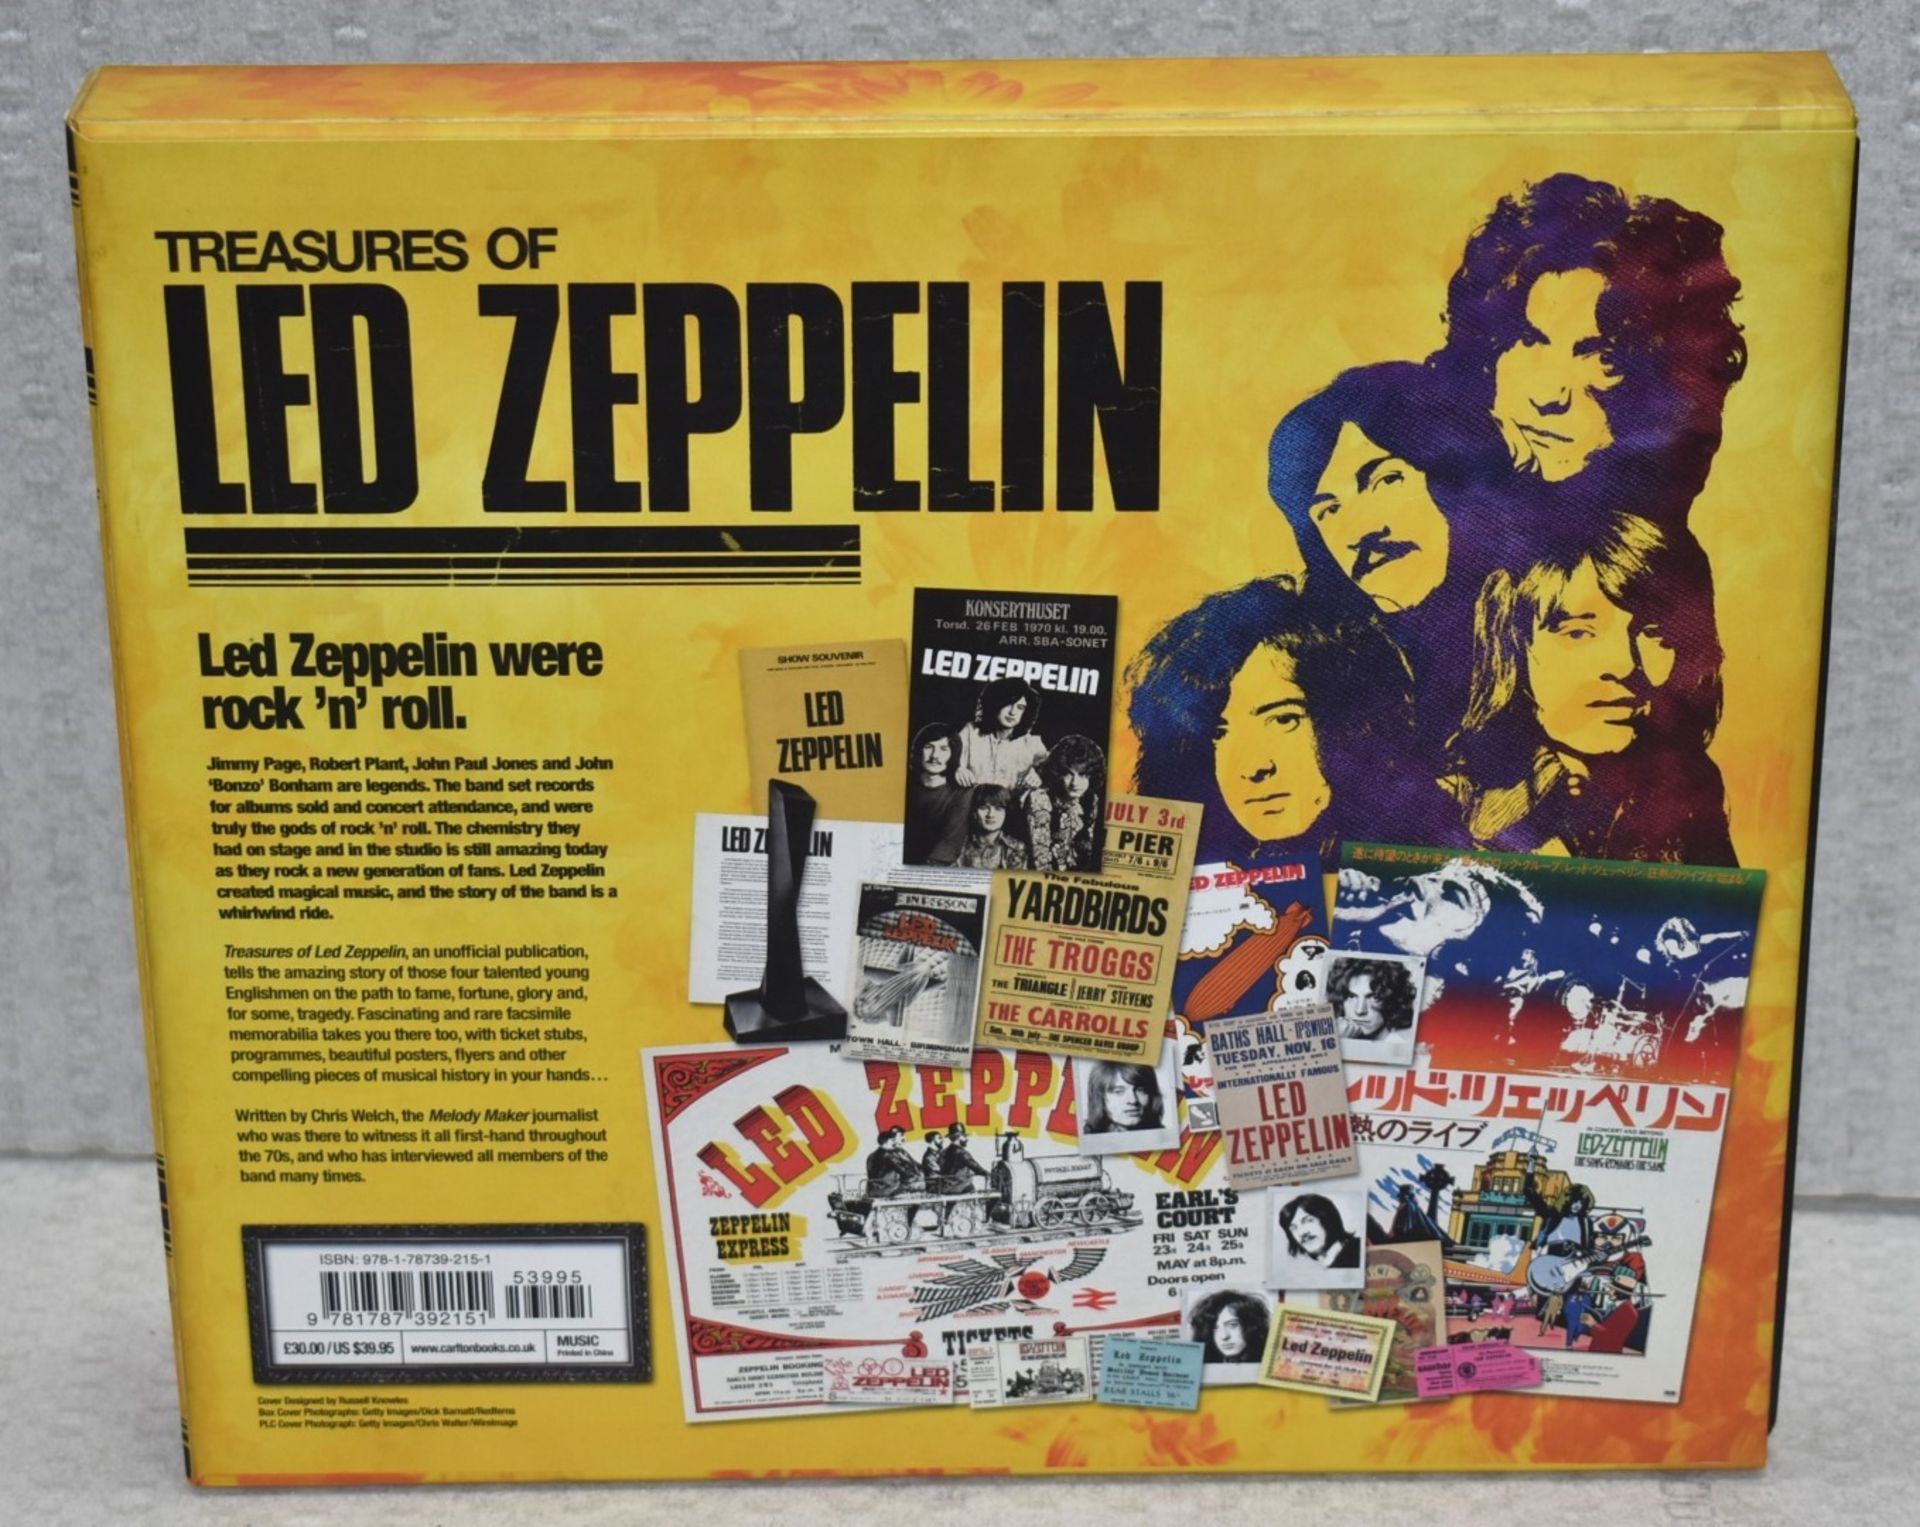 1 x Treasures of Led Zeppelin Box Set - Includes Illustrated Book and Facsimiles of Rare Memorabilia - Image 2 of 9